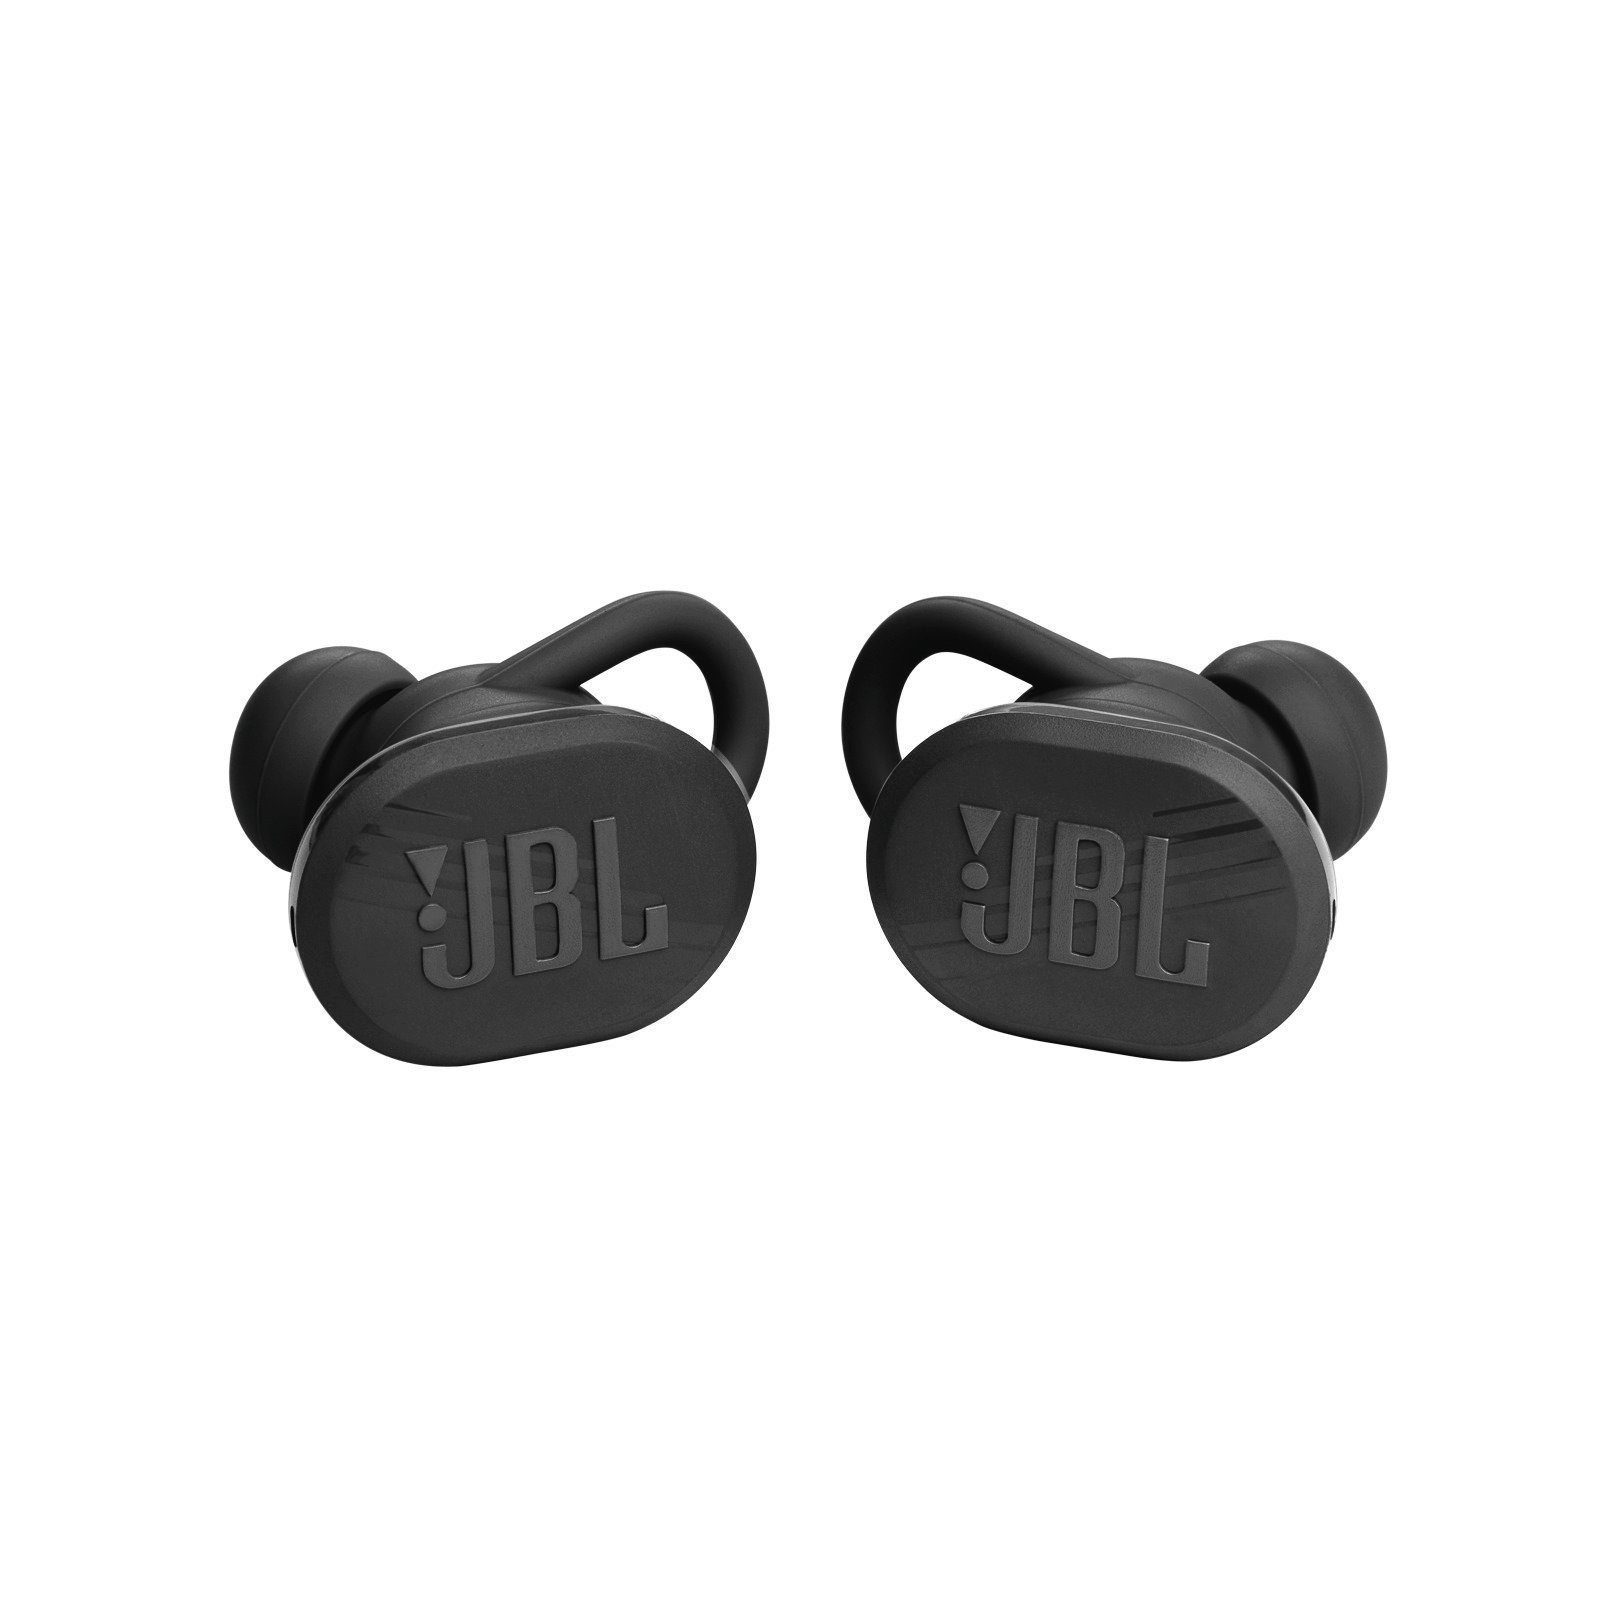 Race JBL deinen aktiven Endurance Lebensstil Ohrpassstücke Twistlock-Design In-Ear-Kopfhörer, und unterstützen